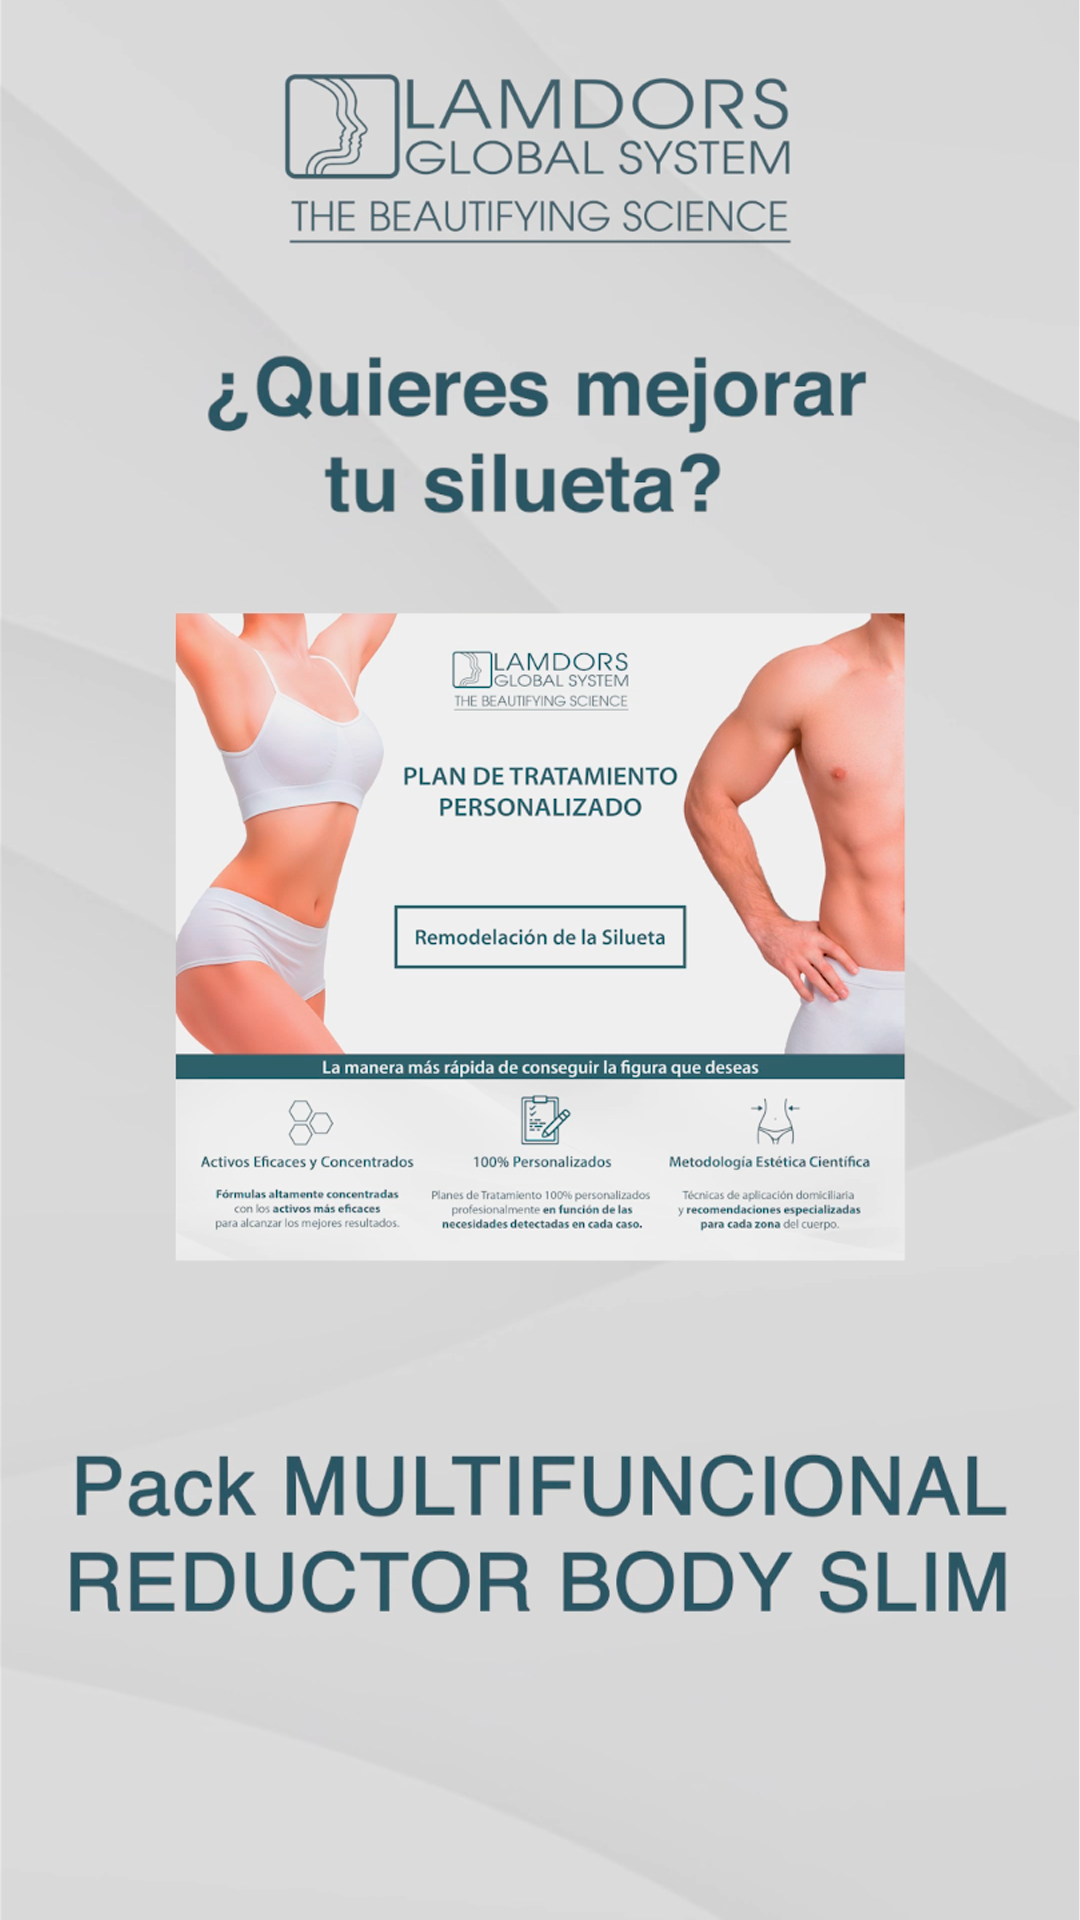 NUEVO pack Multifuncional Reductor Body Slim